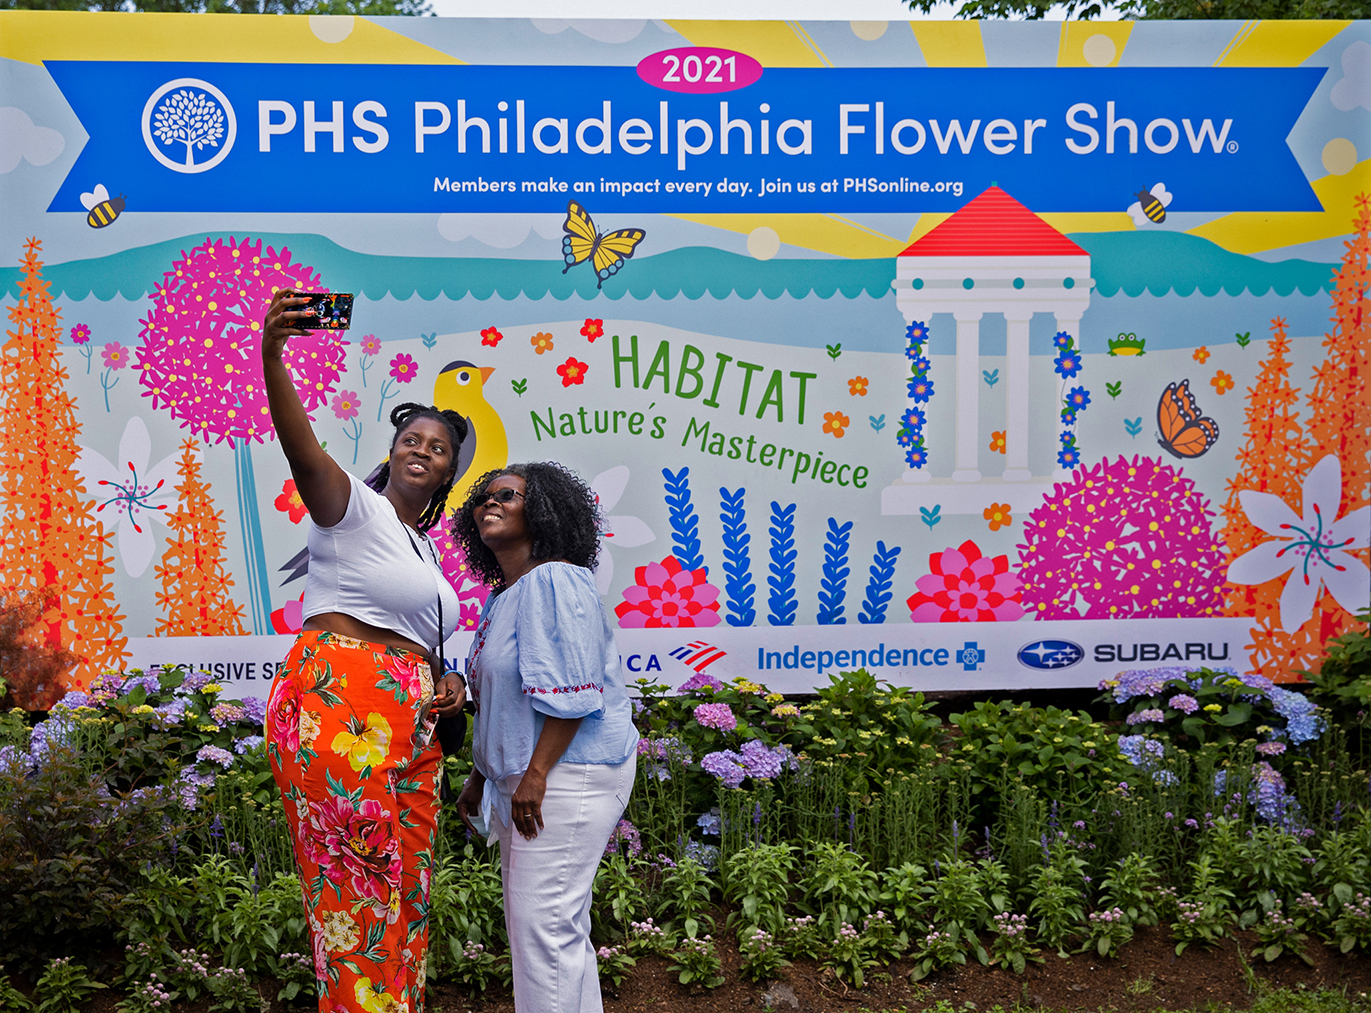 Billboard at entrance to the 2021 PHS Philadelphia Flower Show.